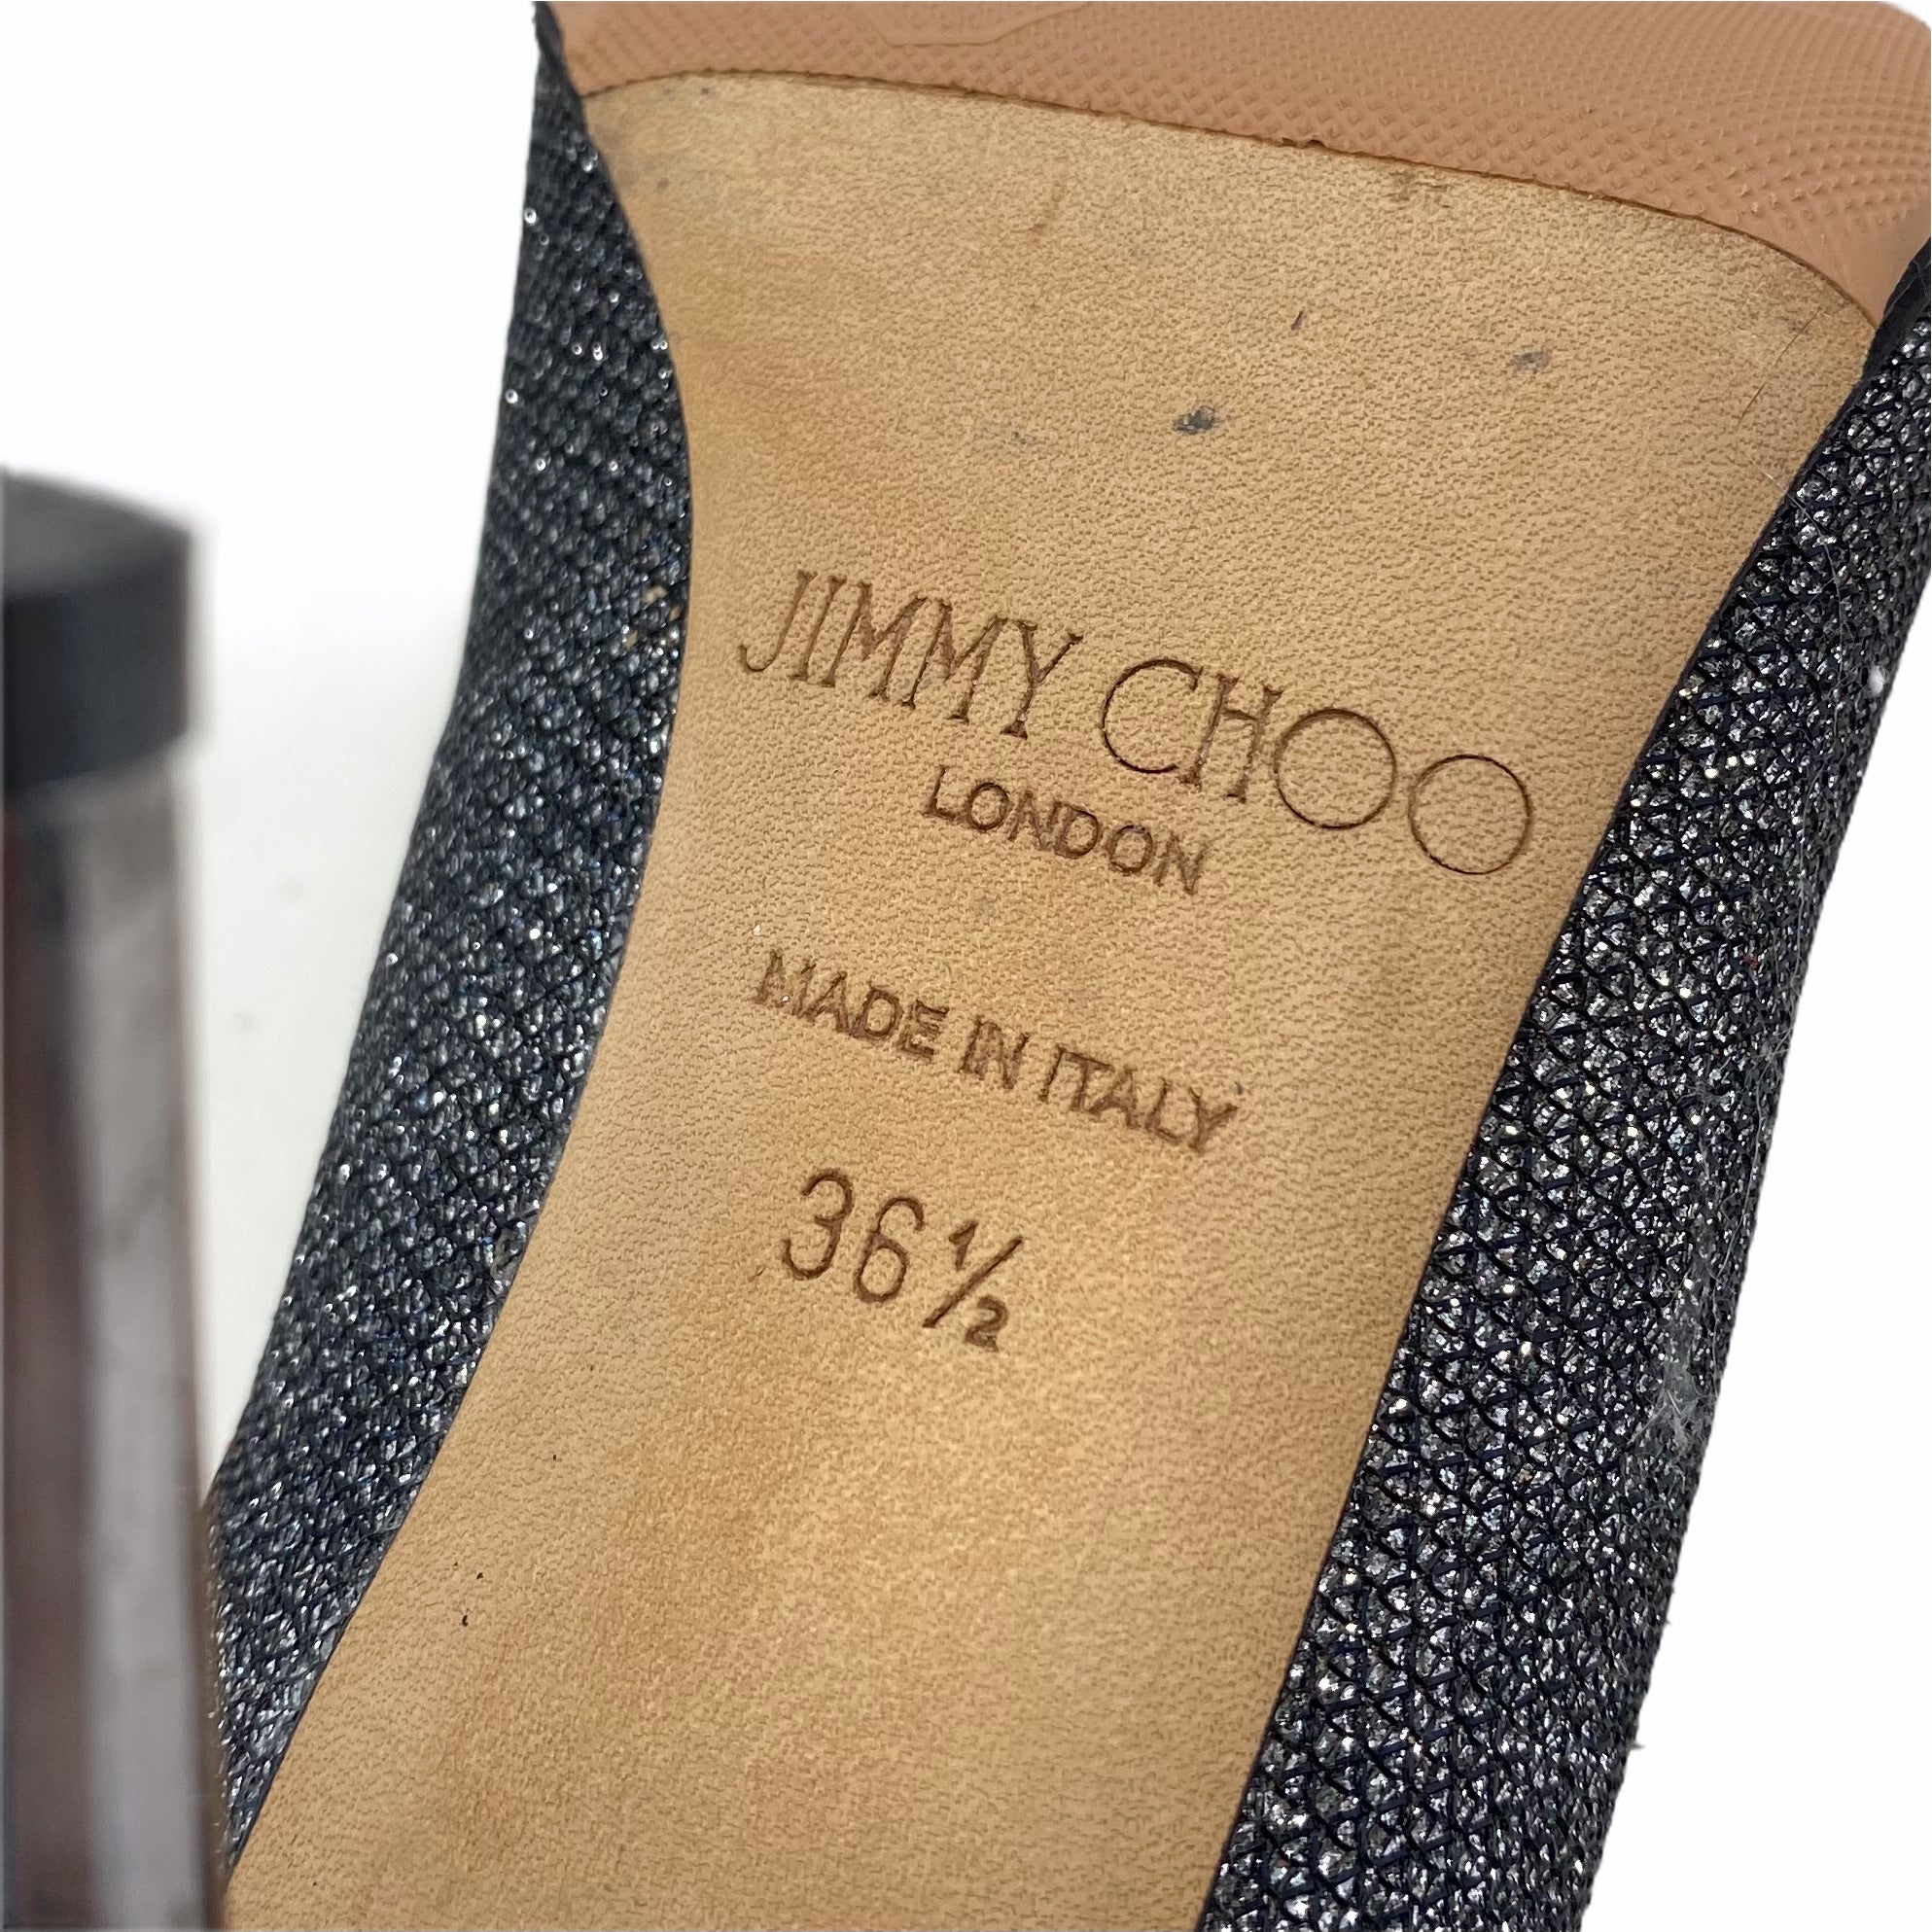 Jimmy Choo Anthracite Lame Glitter Romy Pumps 36.5